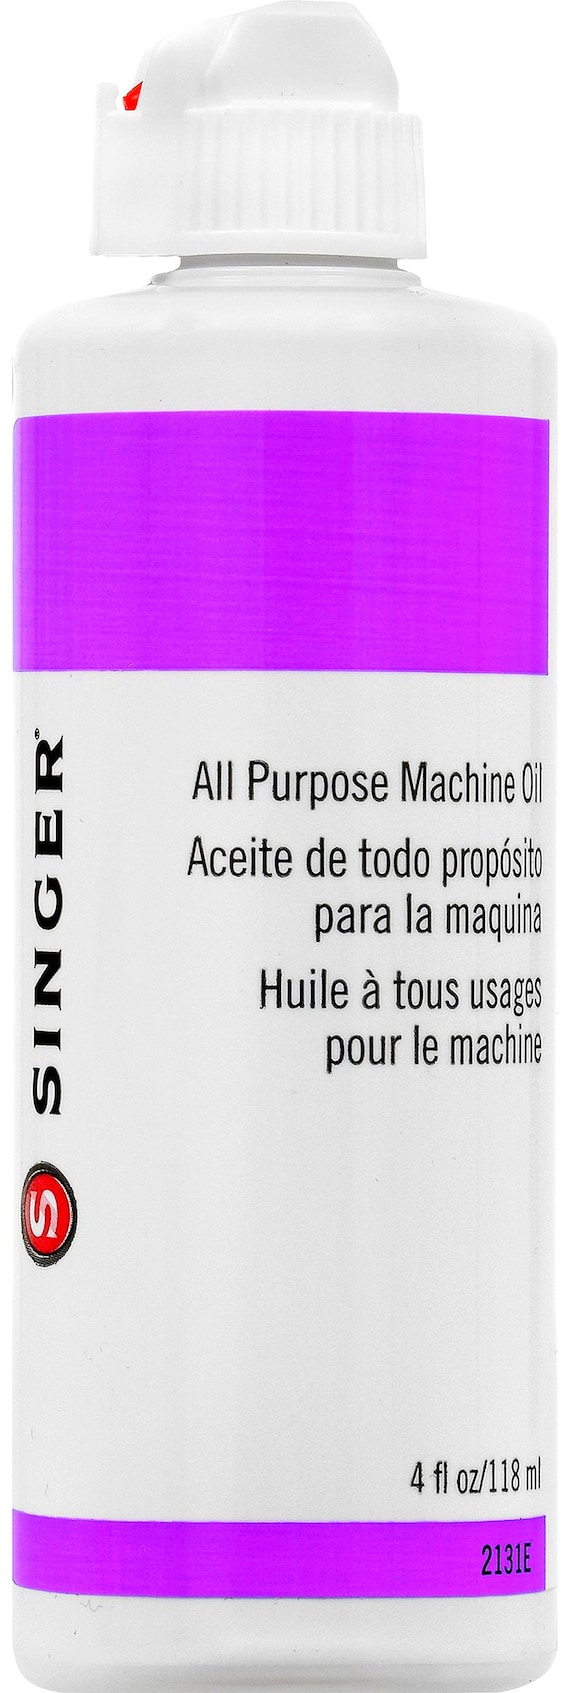 SINGER 2131E All Purpose Machine Oil, 4-Fluid Ounces